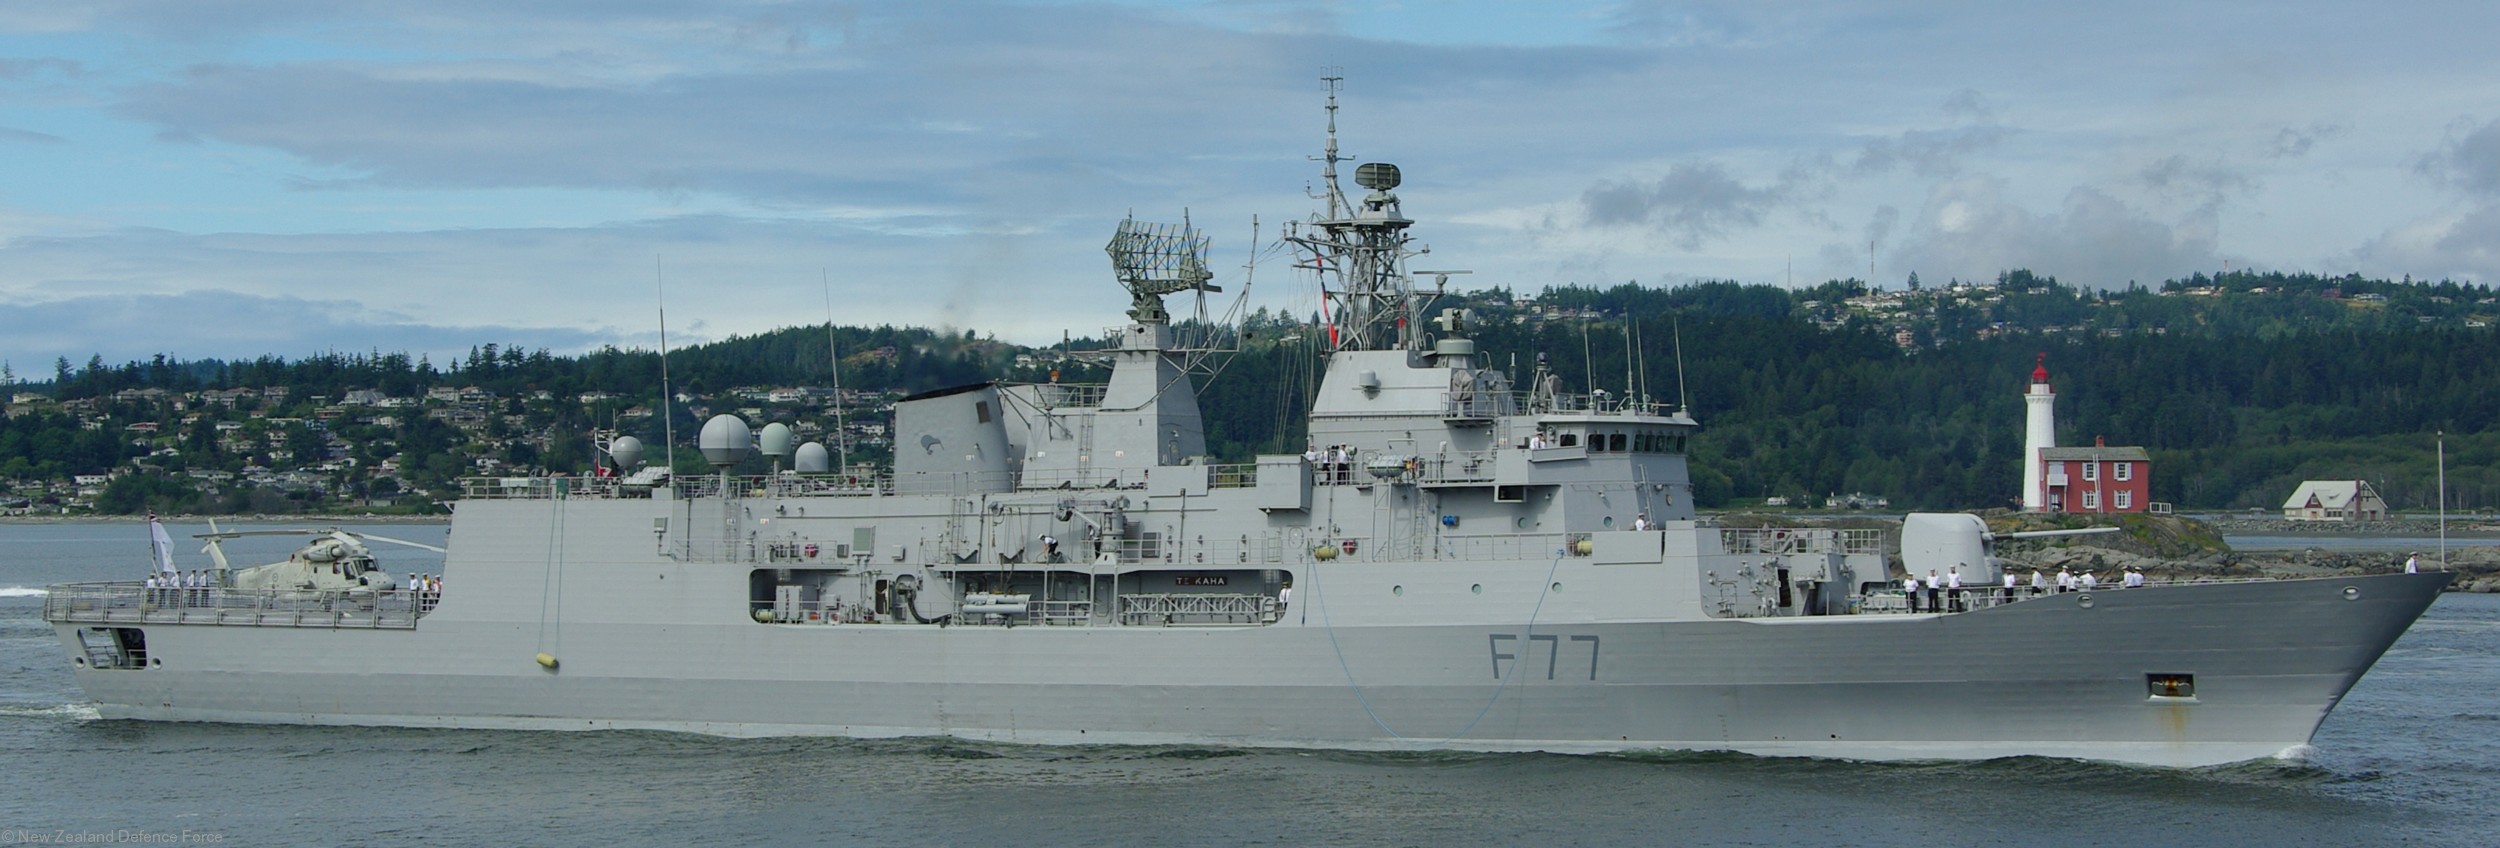 f-77 hmnzs te kaha anzac class frigate royal new zealand navy 13